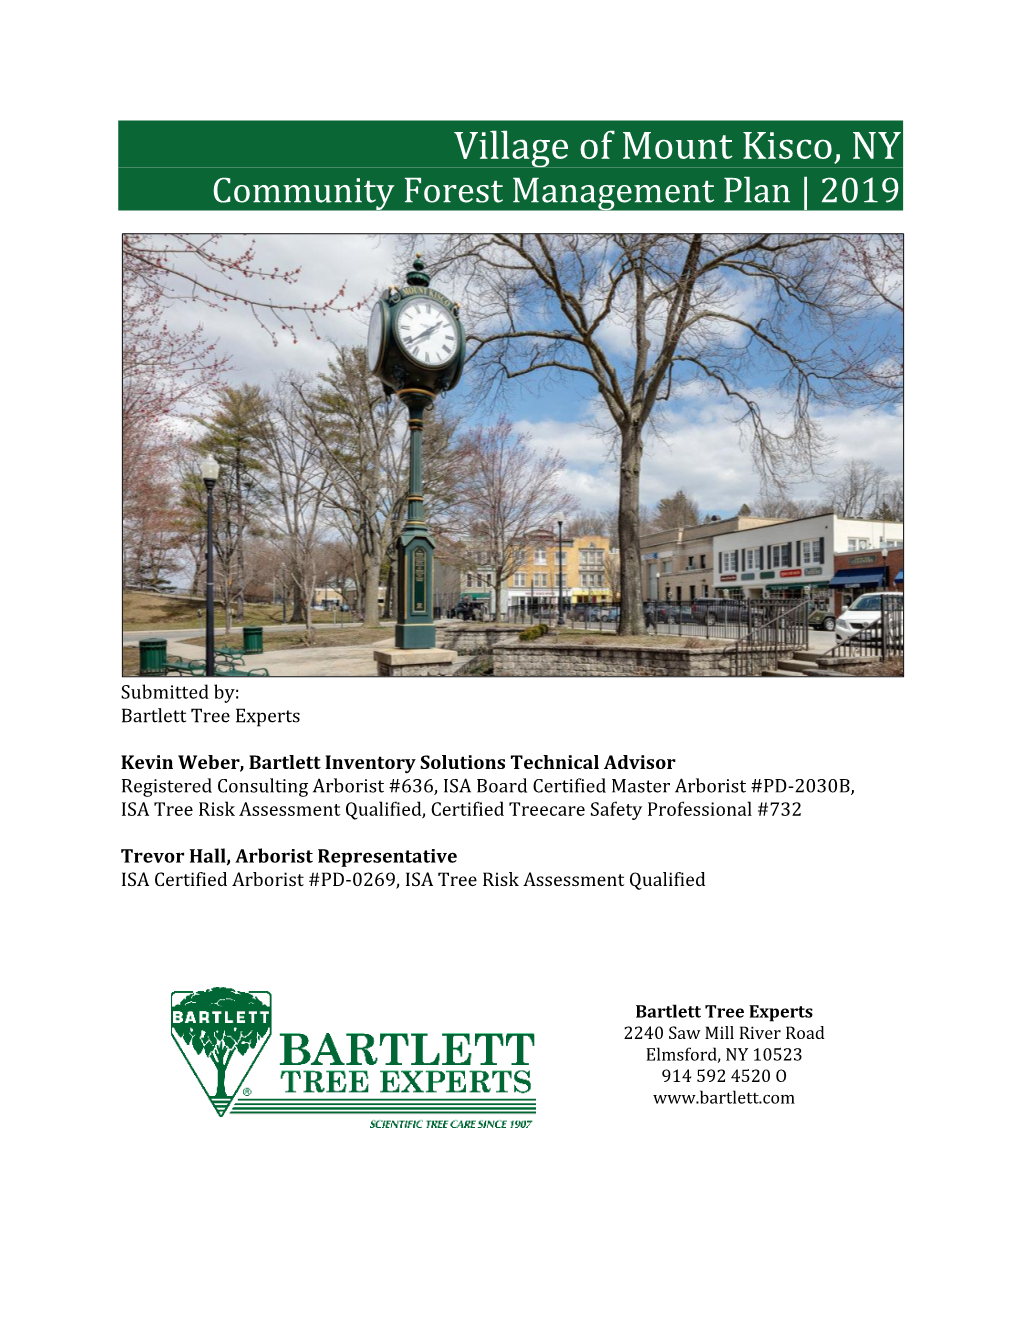 Village of Mount Kisco, NY Community Forest Management Plan | 2019